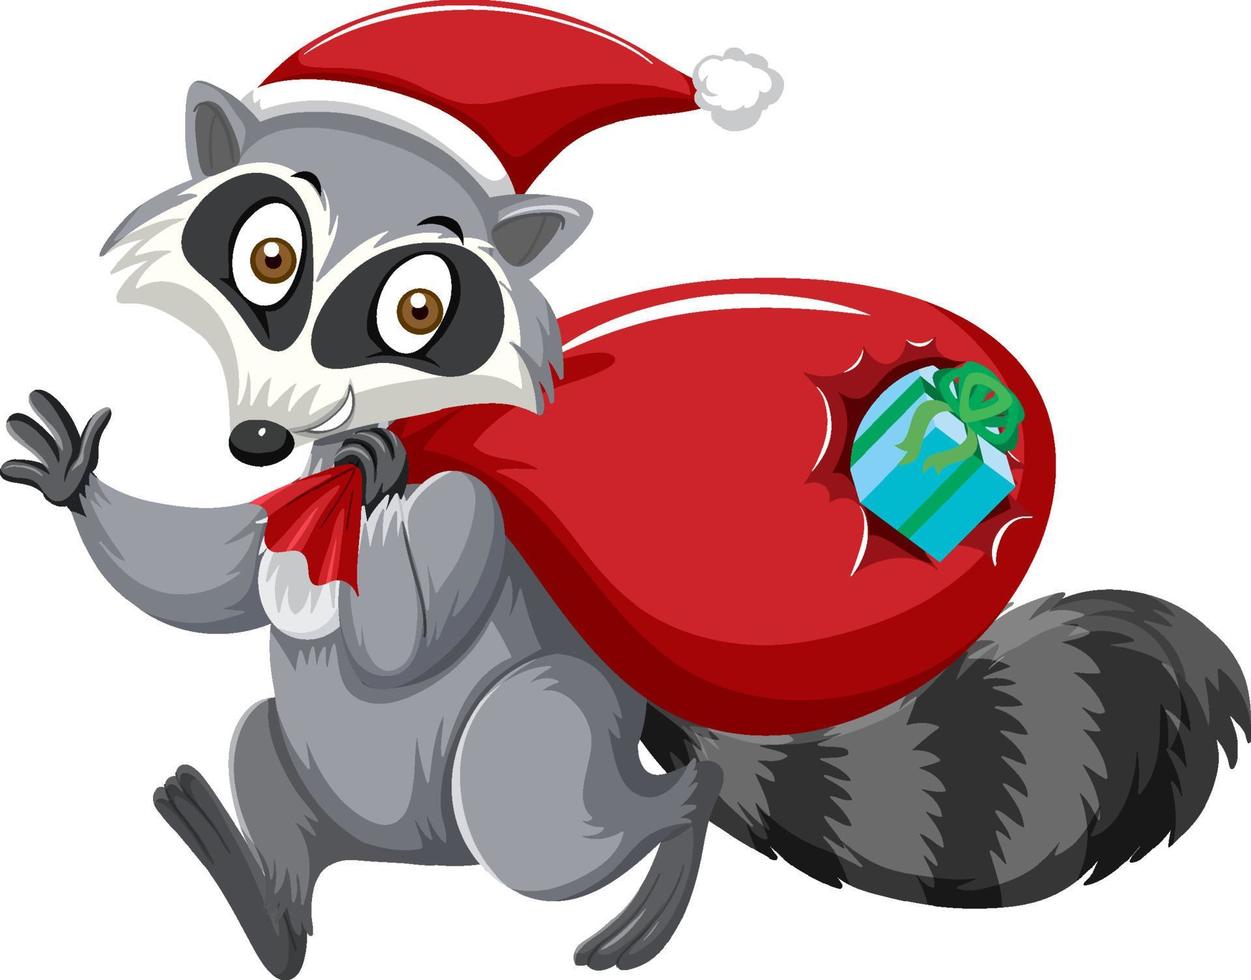 Cute Raccoon wearing Christmas hat cartoon character vector